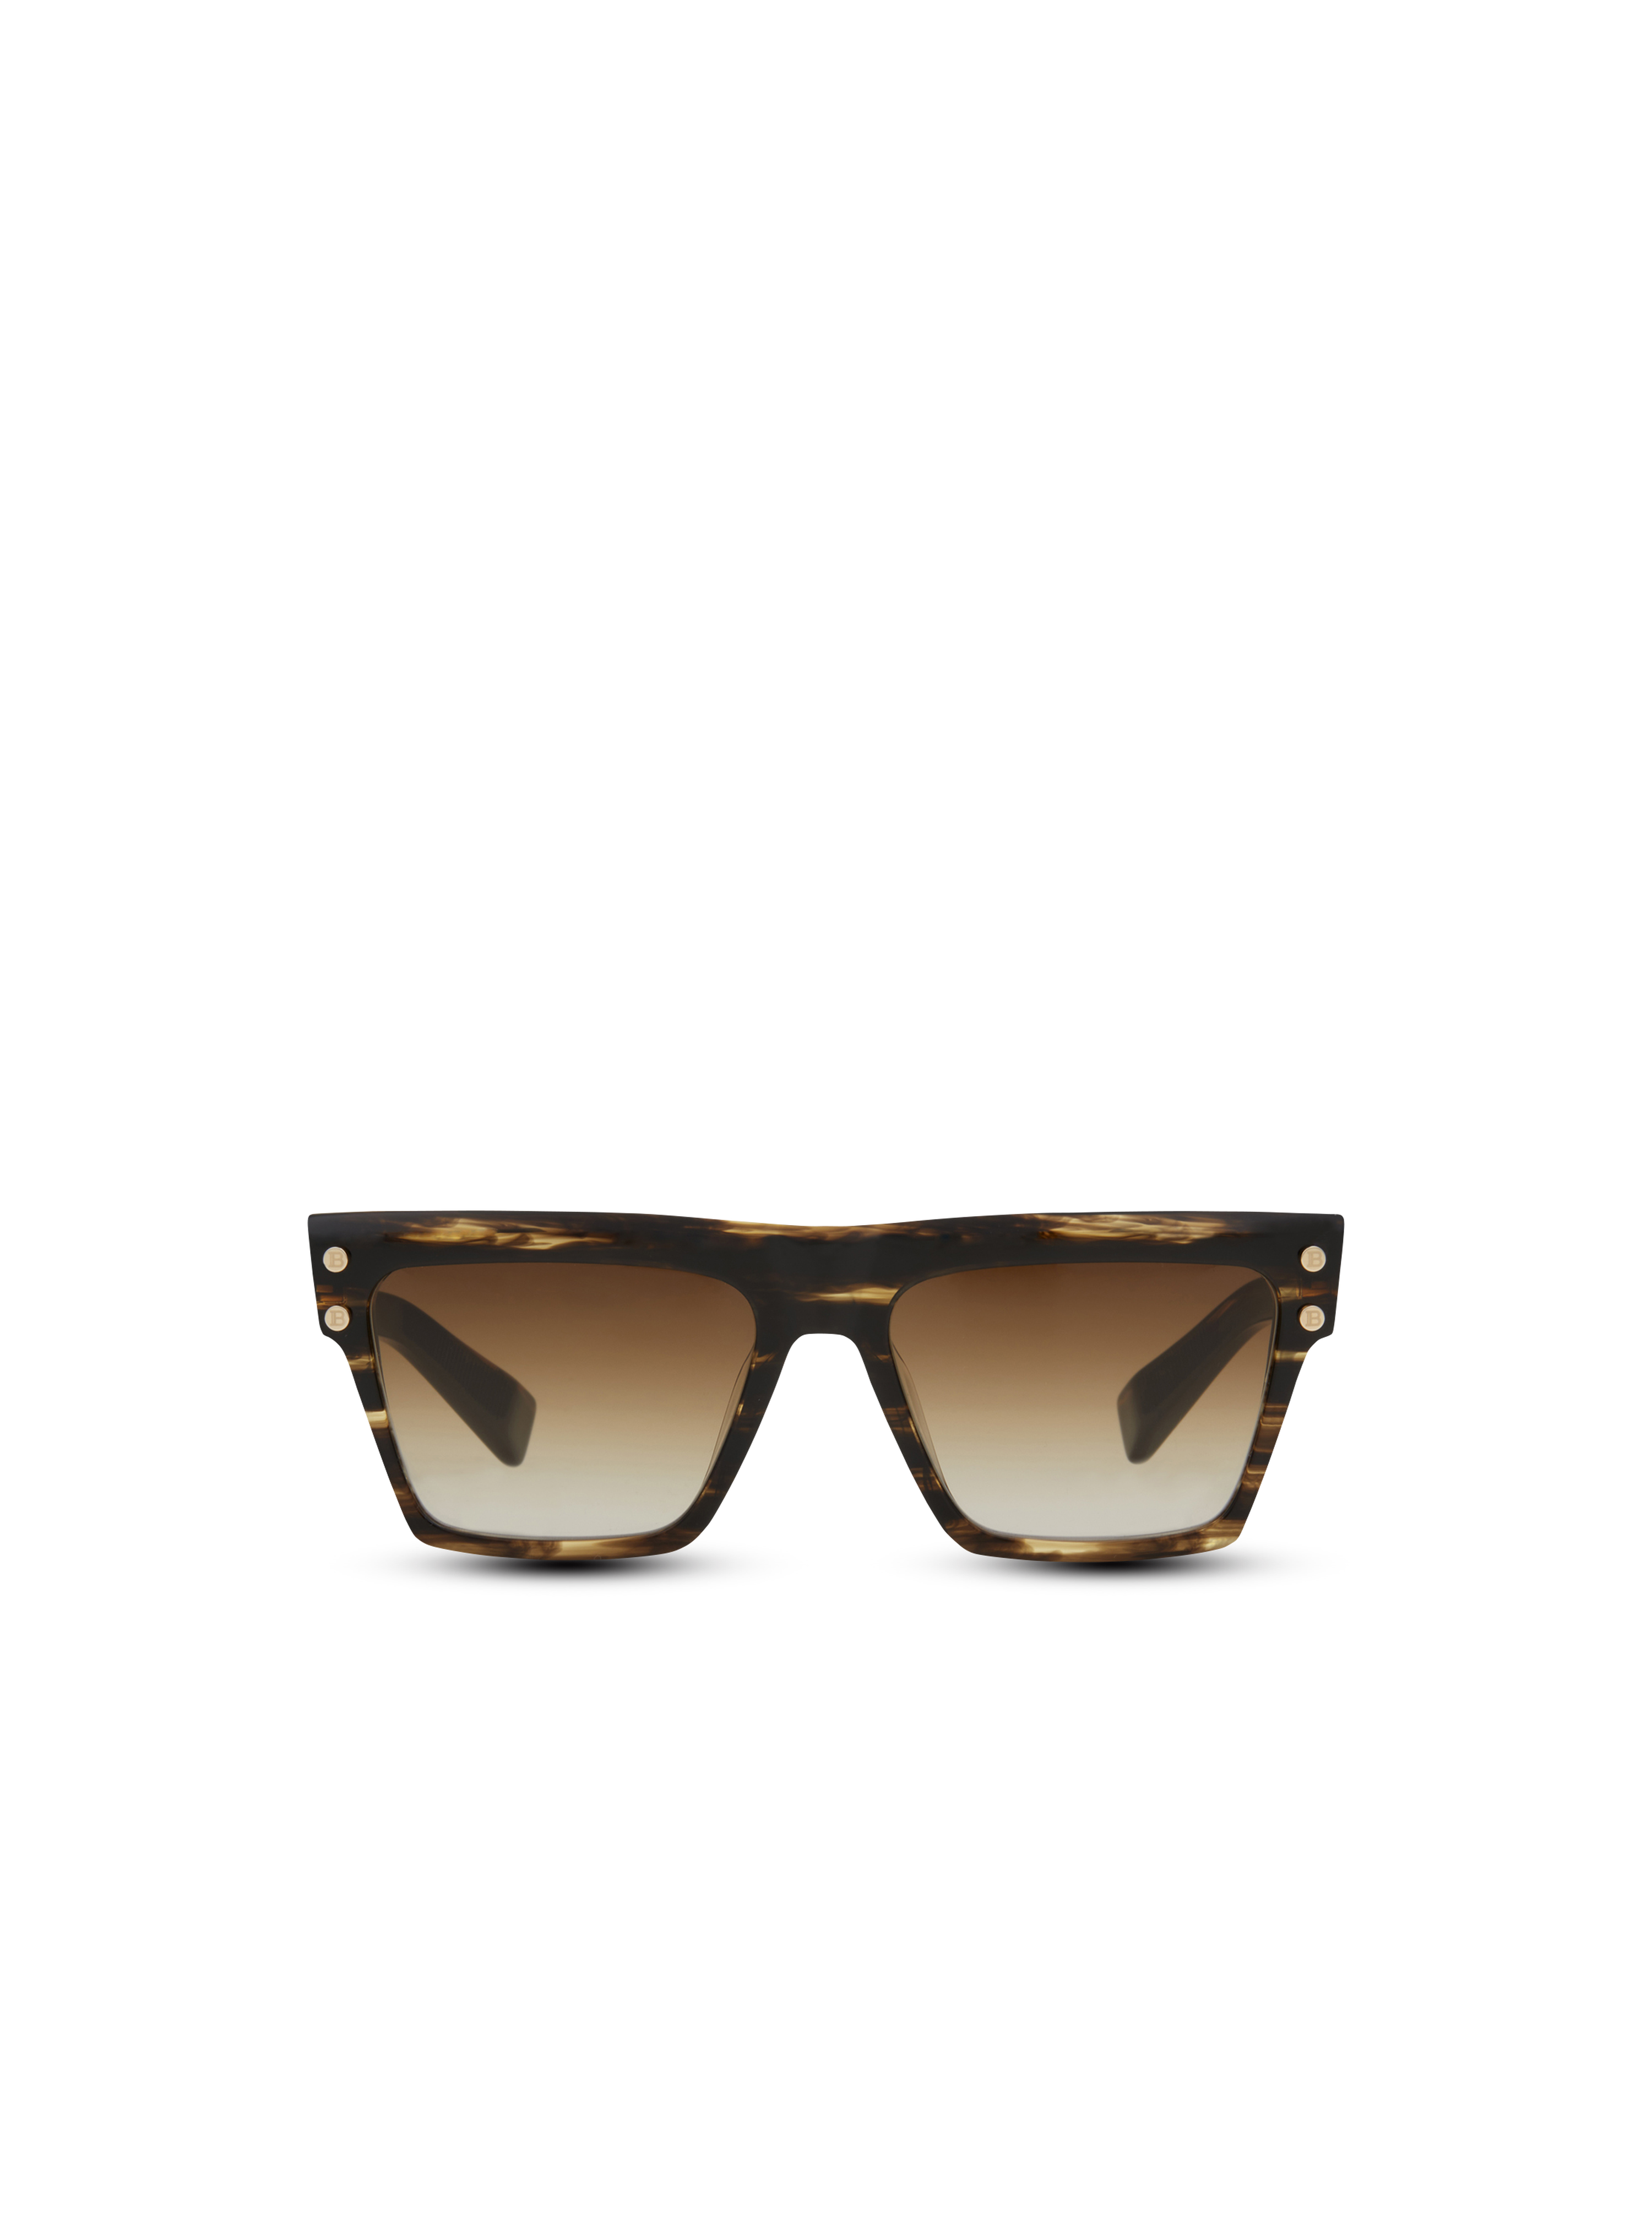  B-V sunglasses, brown